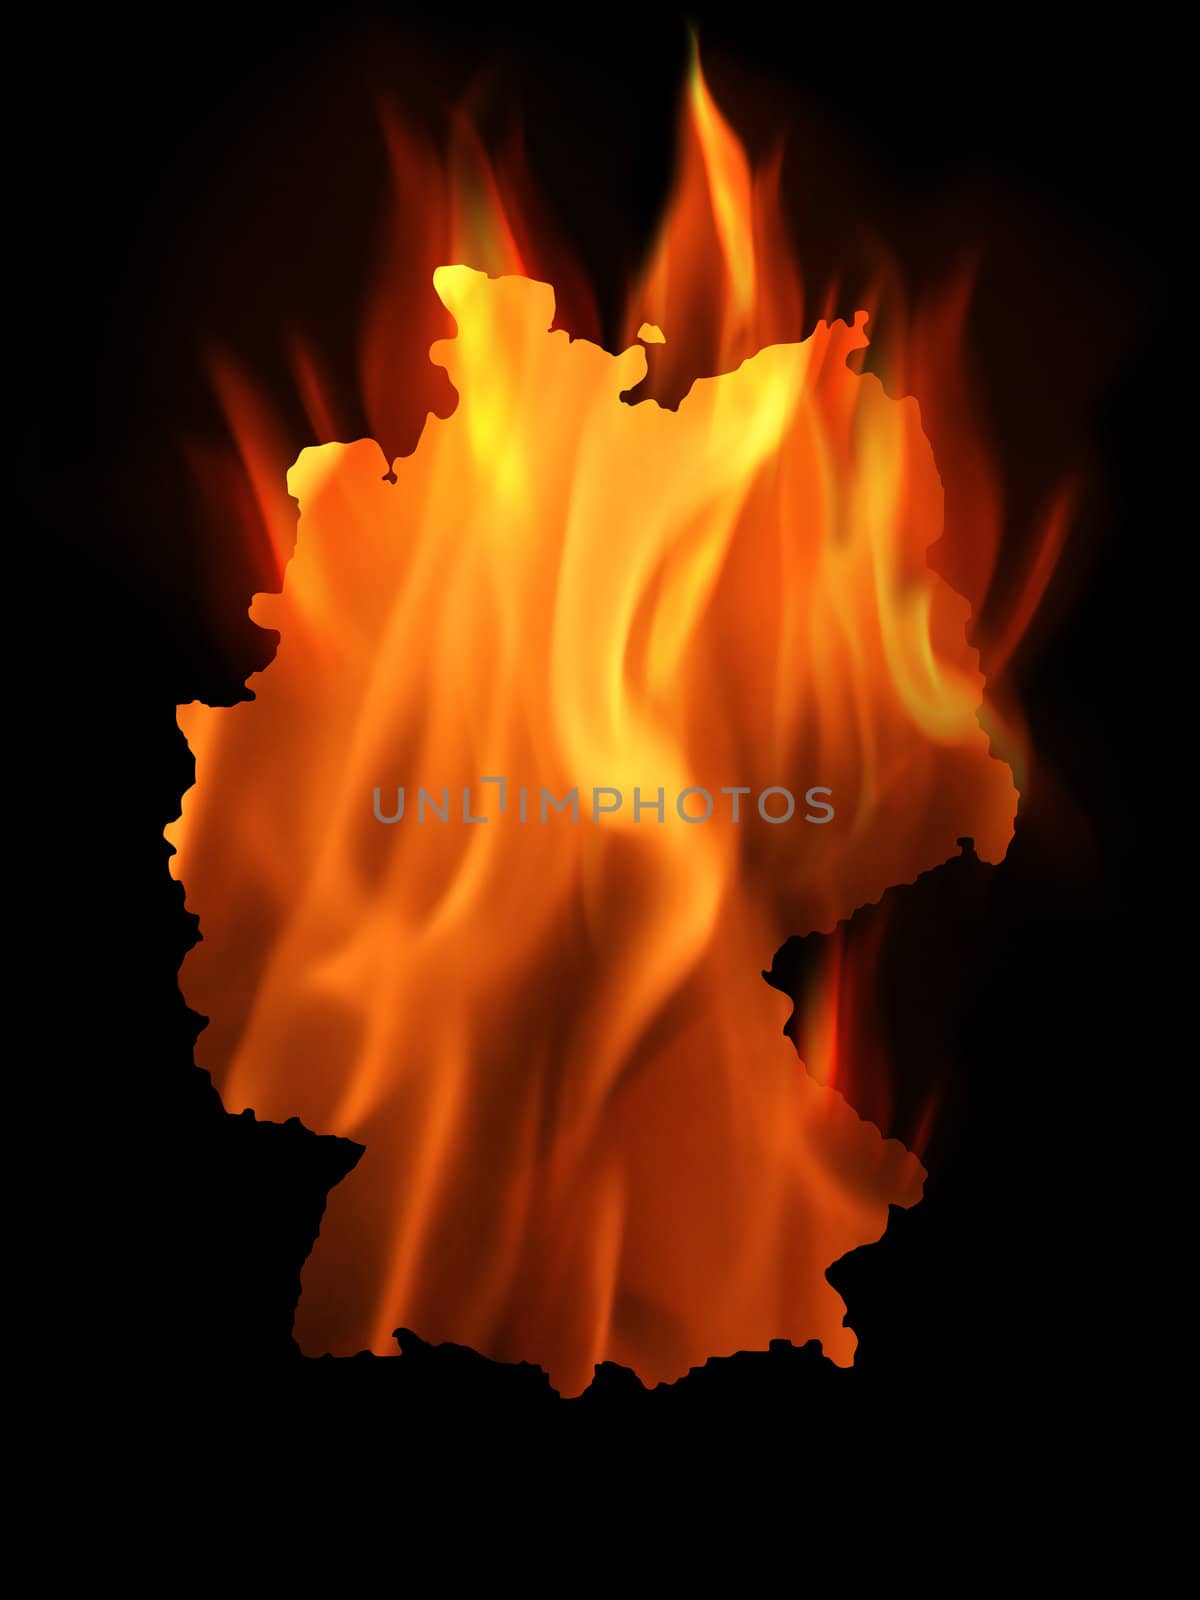 Burning Germany by Hasenonkel